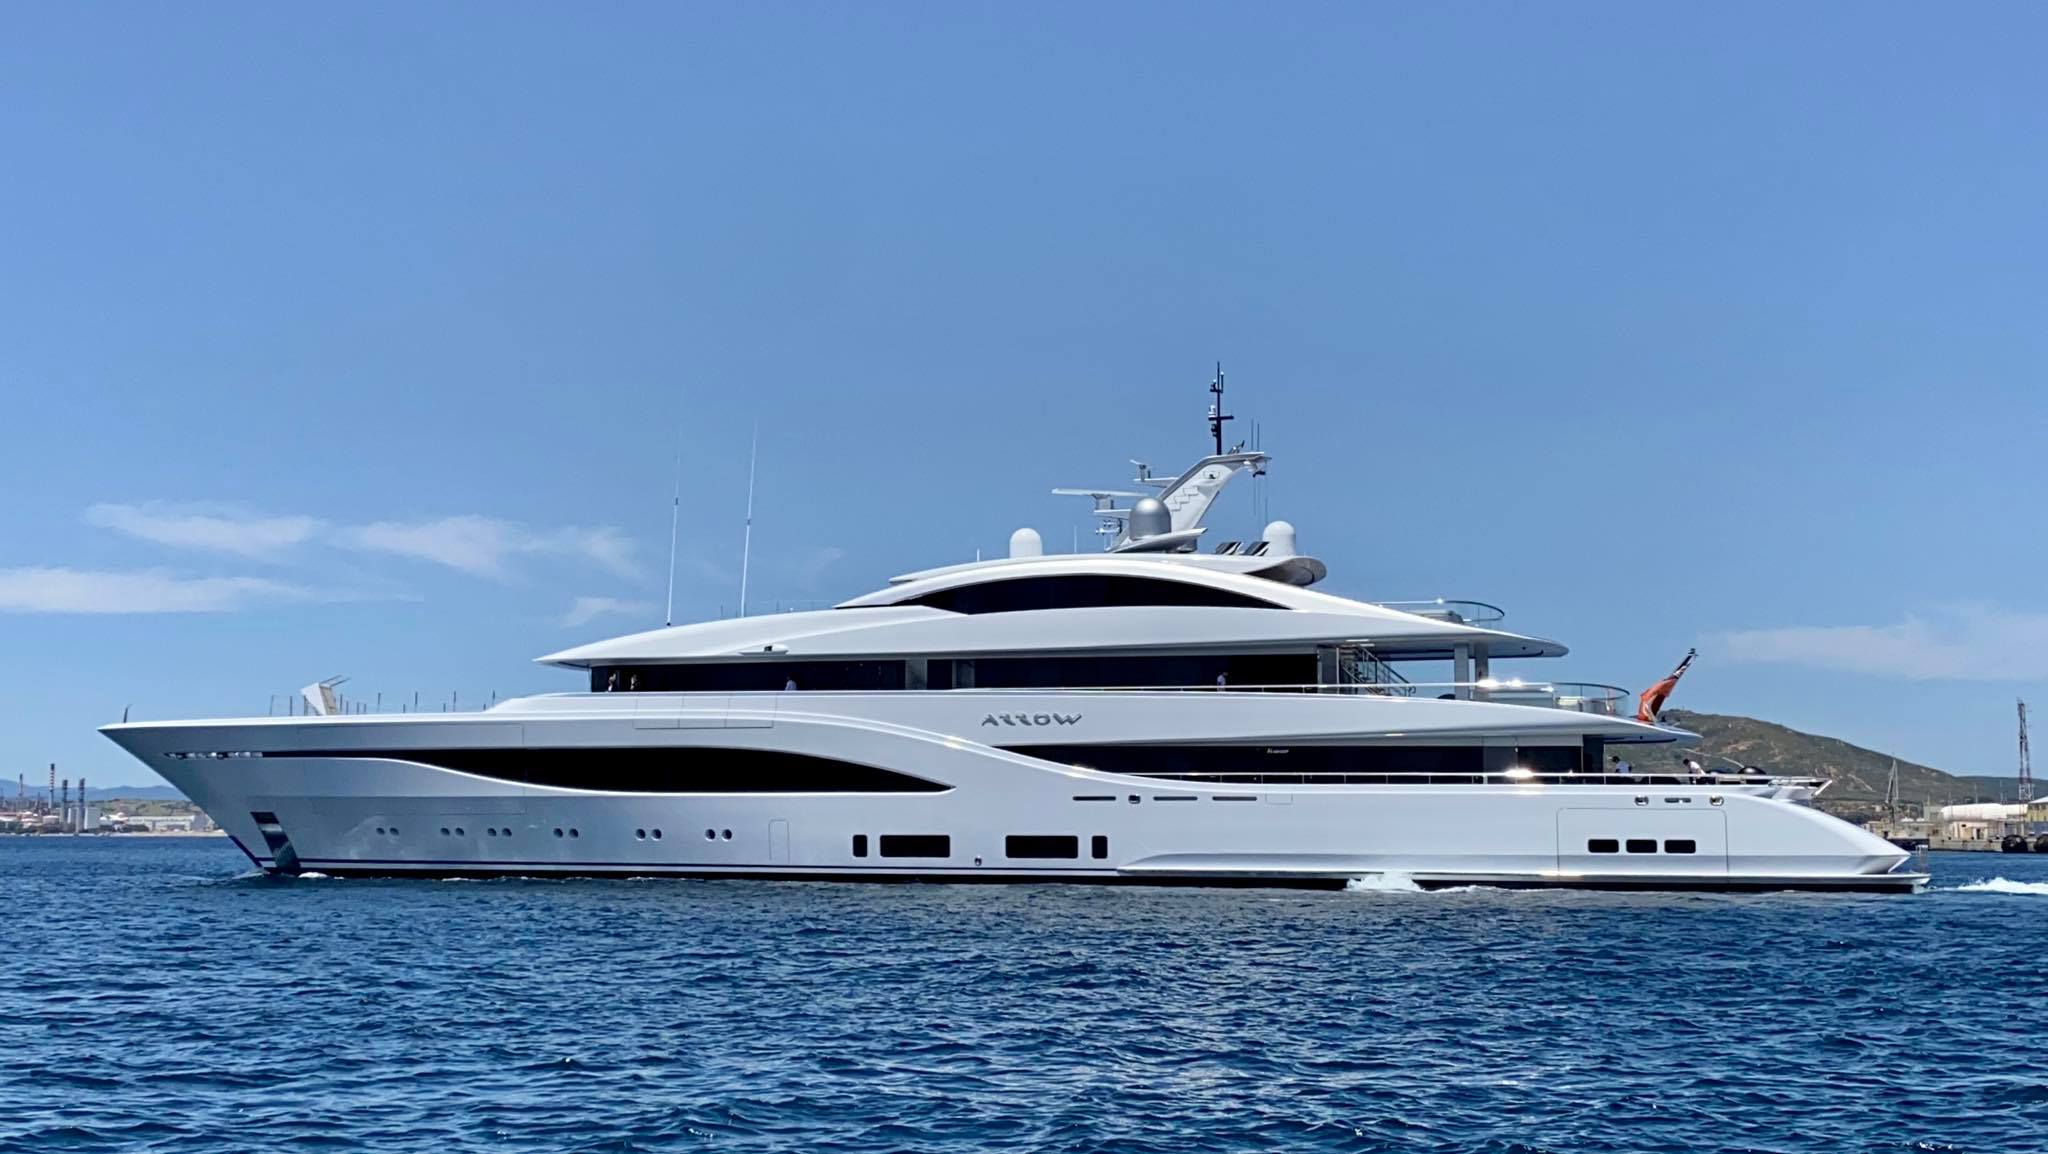 ARROW Yacht • Feadship • 2020 • owner Michael Platt 